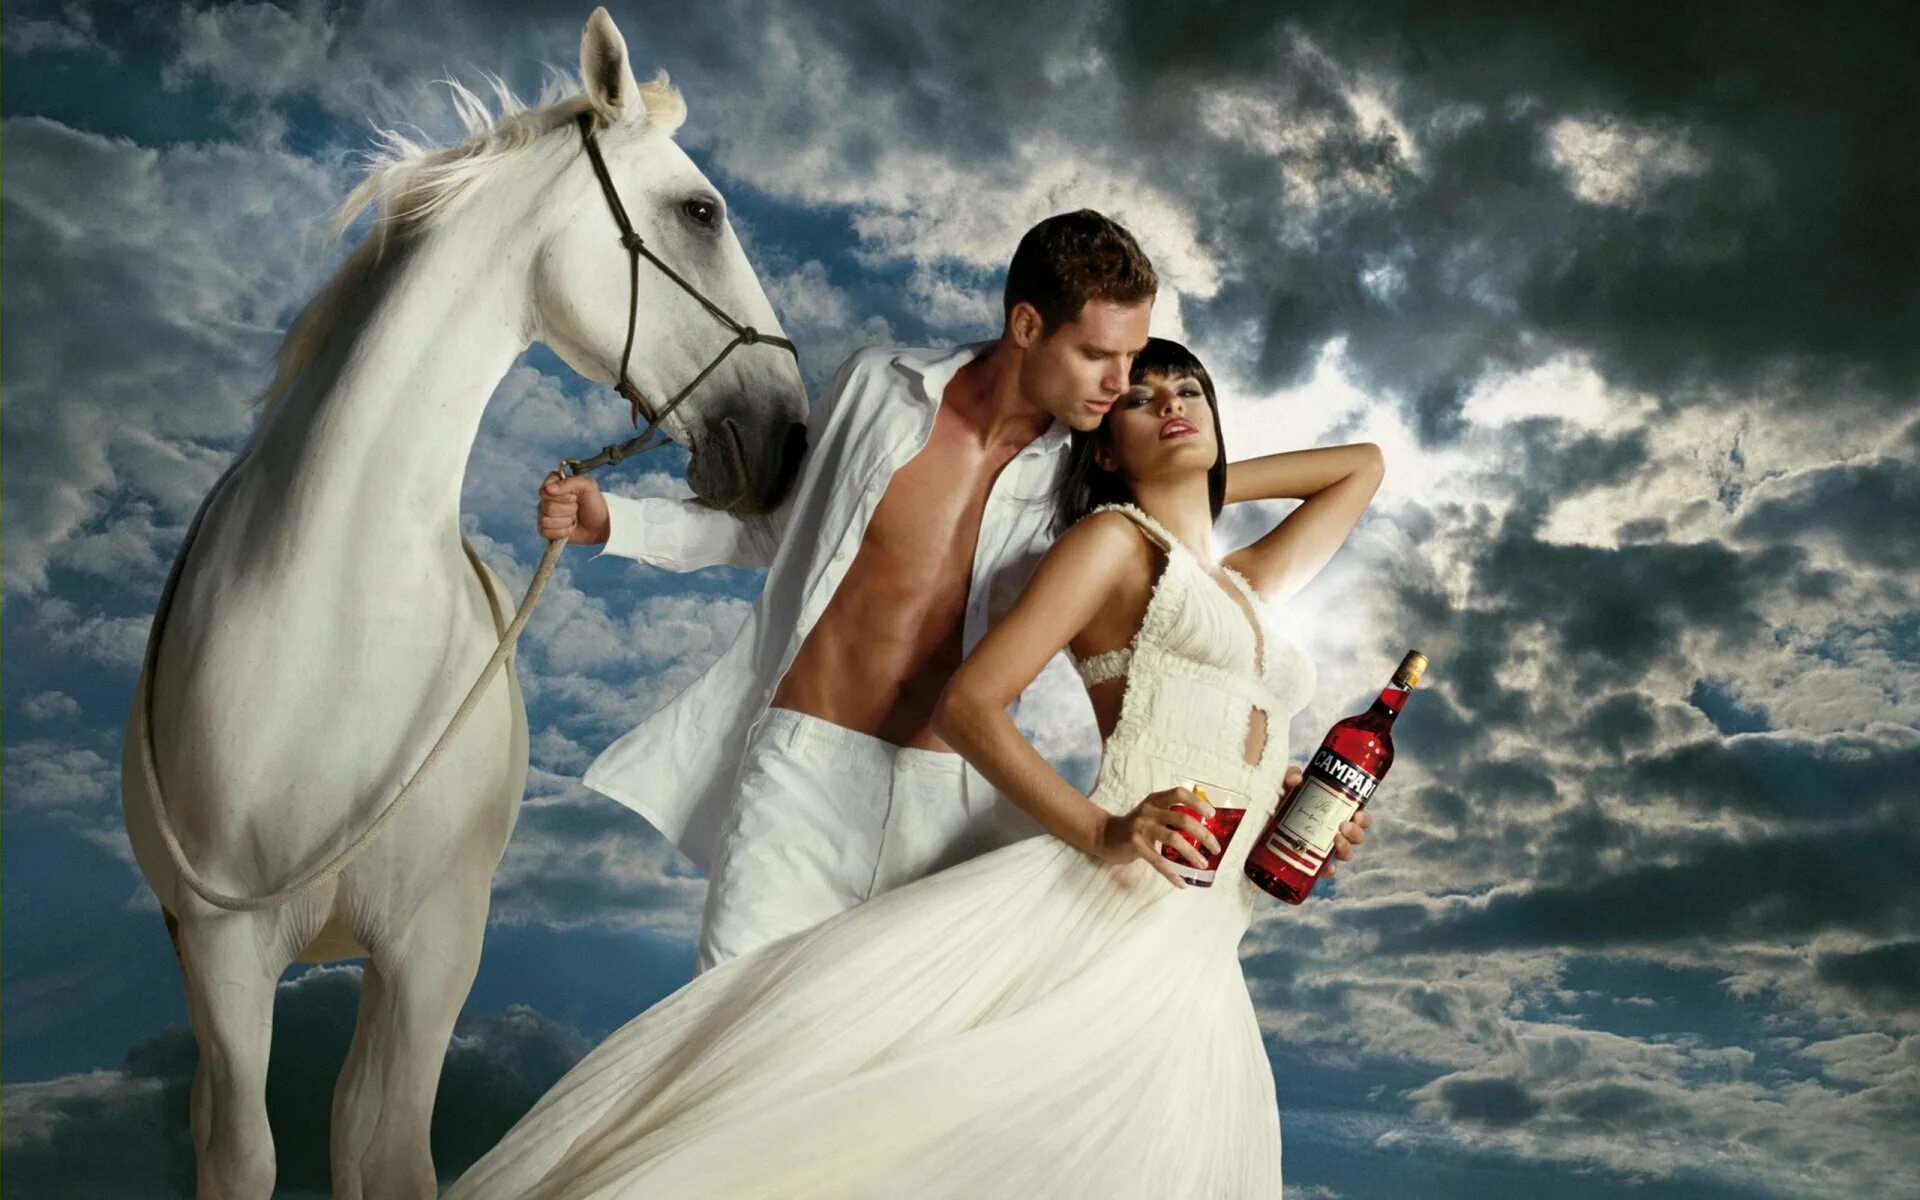 Мужчина и женщина на коне. Фотосессия с лошадьми. Принц на белом коне.